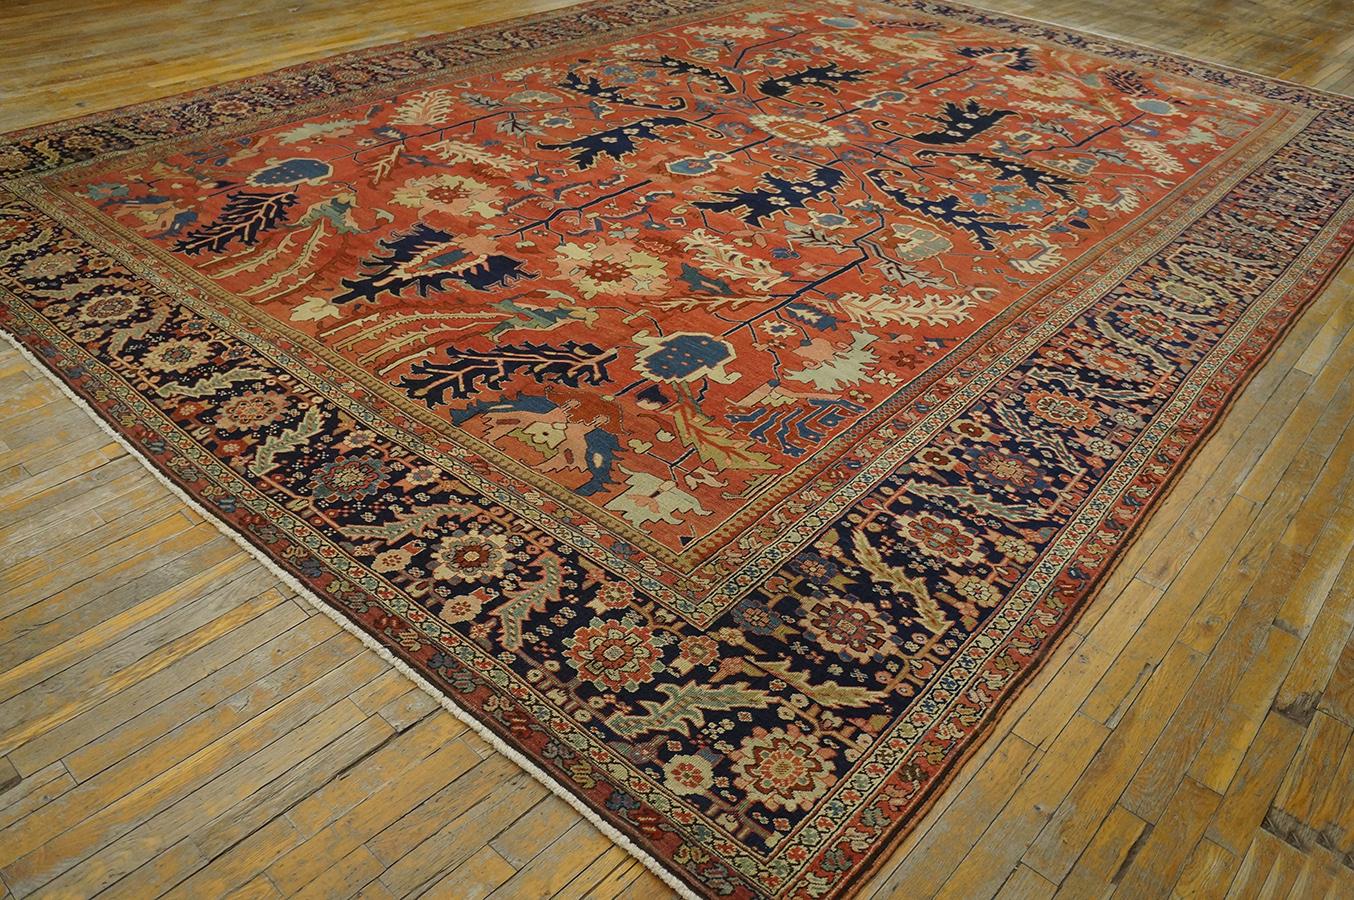 Antique Persian Serapi rug. Size: 11'6